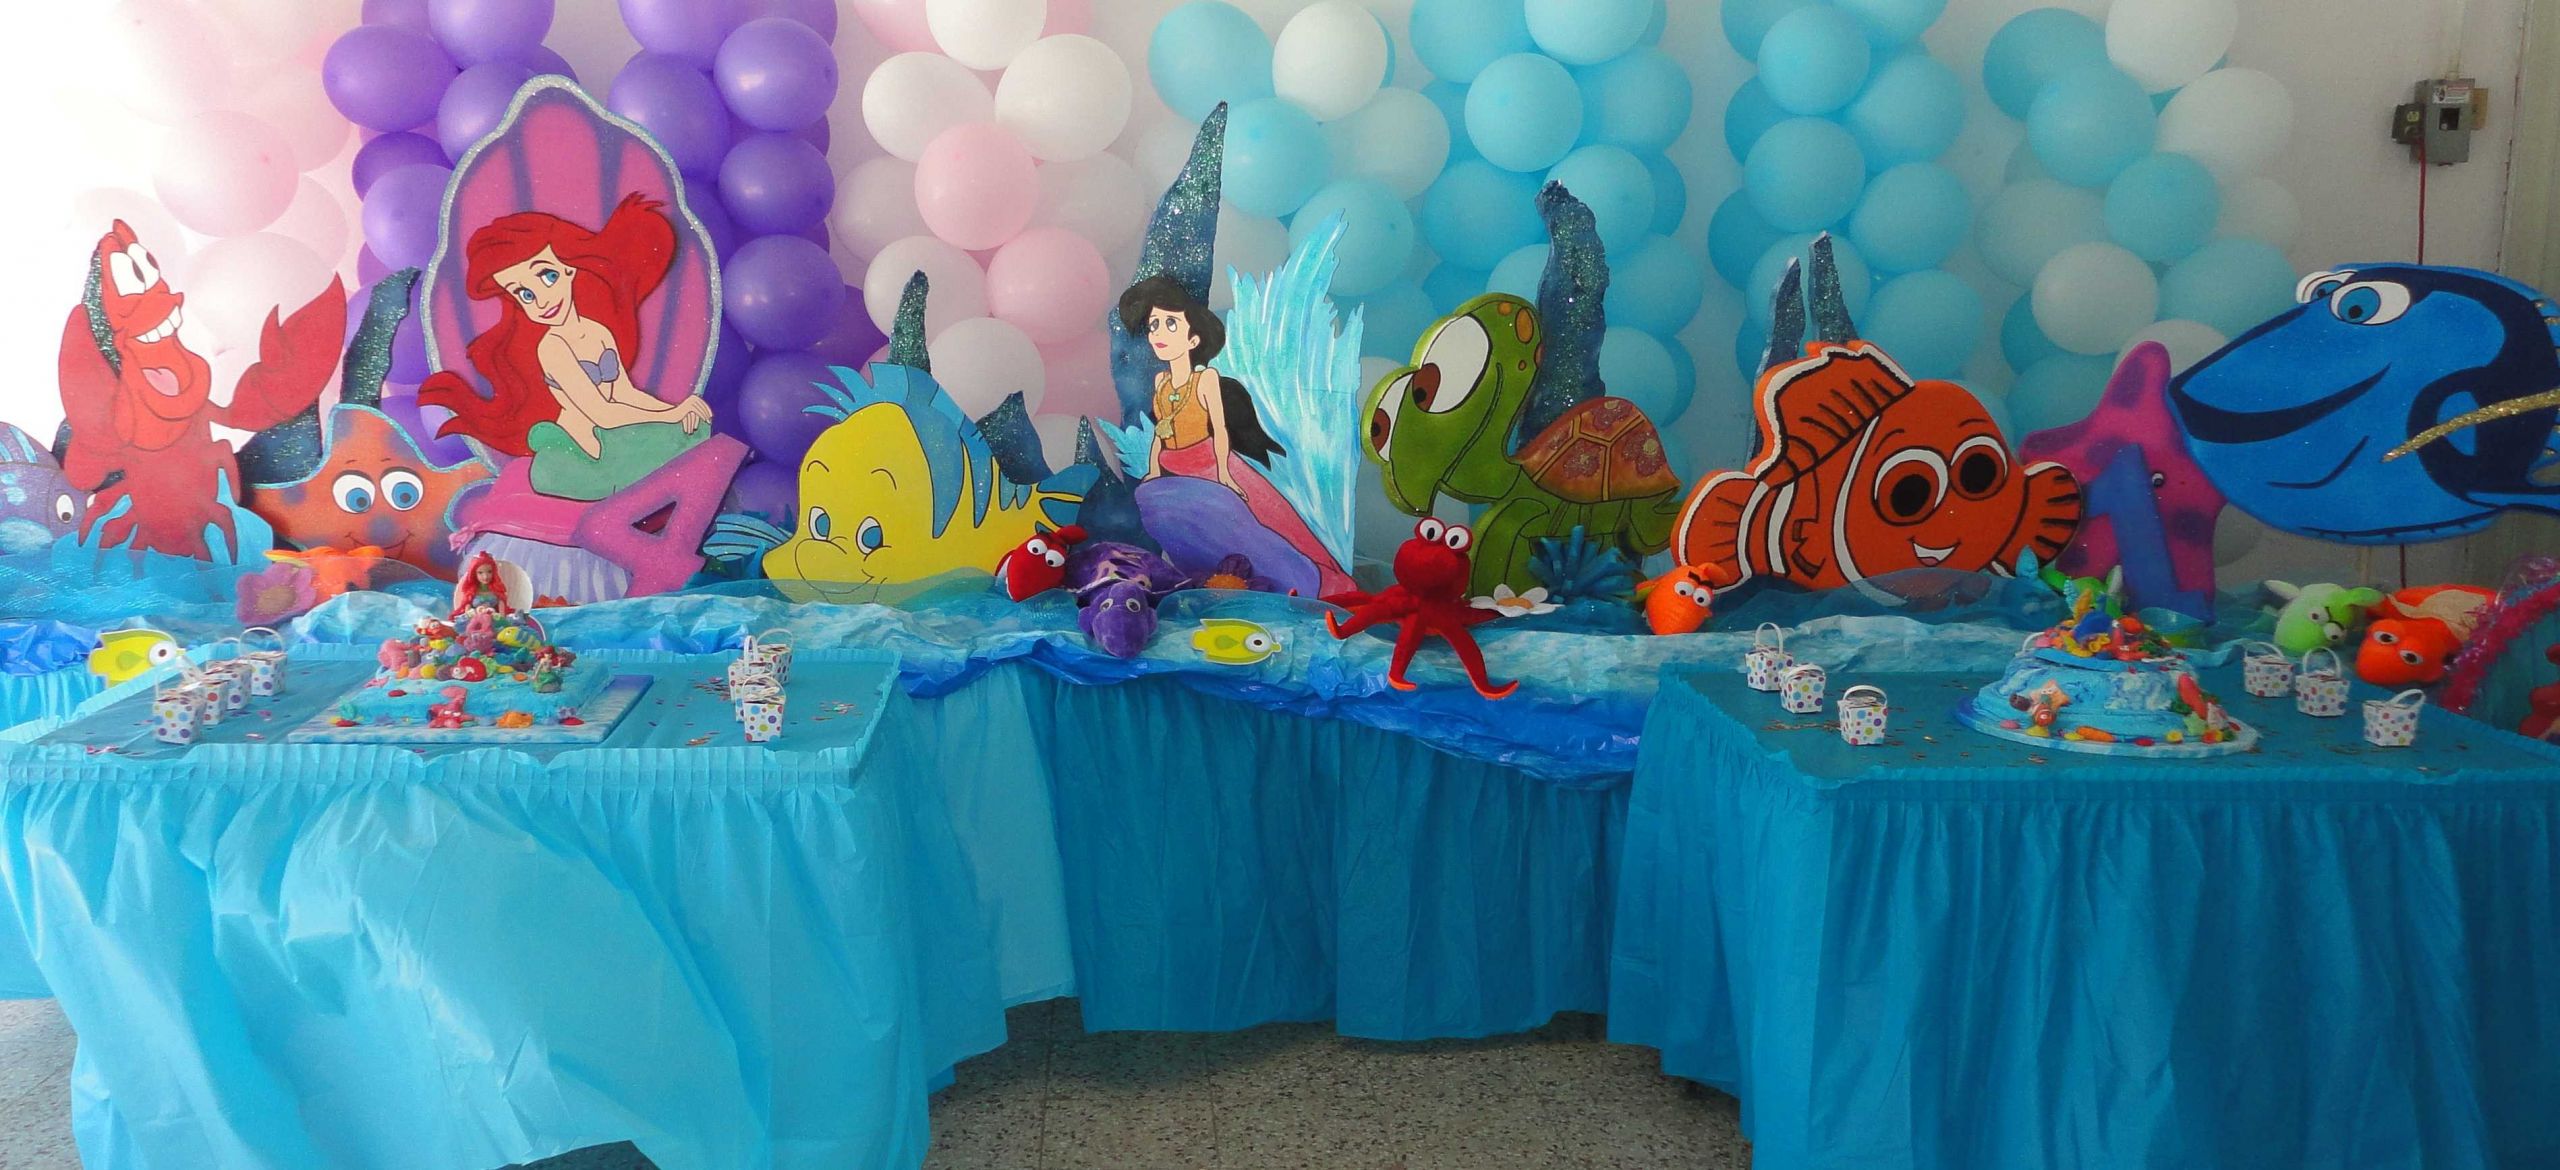 Ariel The Little Mermaid Birthday Party Ideas
 Disney Little Mermaid Ariel 3 ft Prop Standee